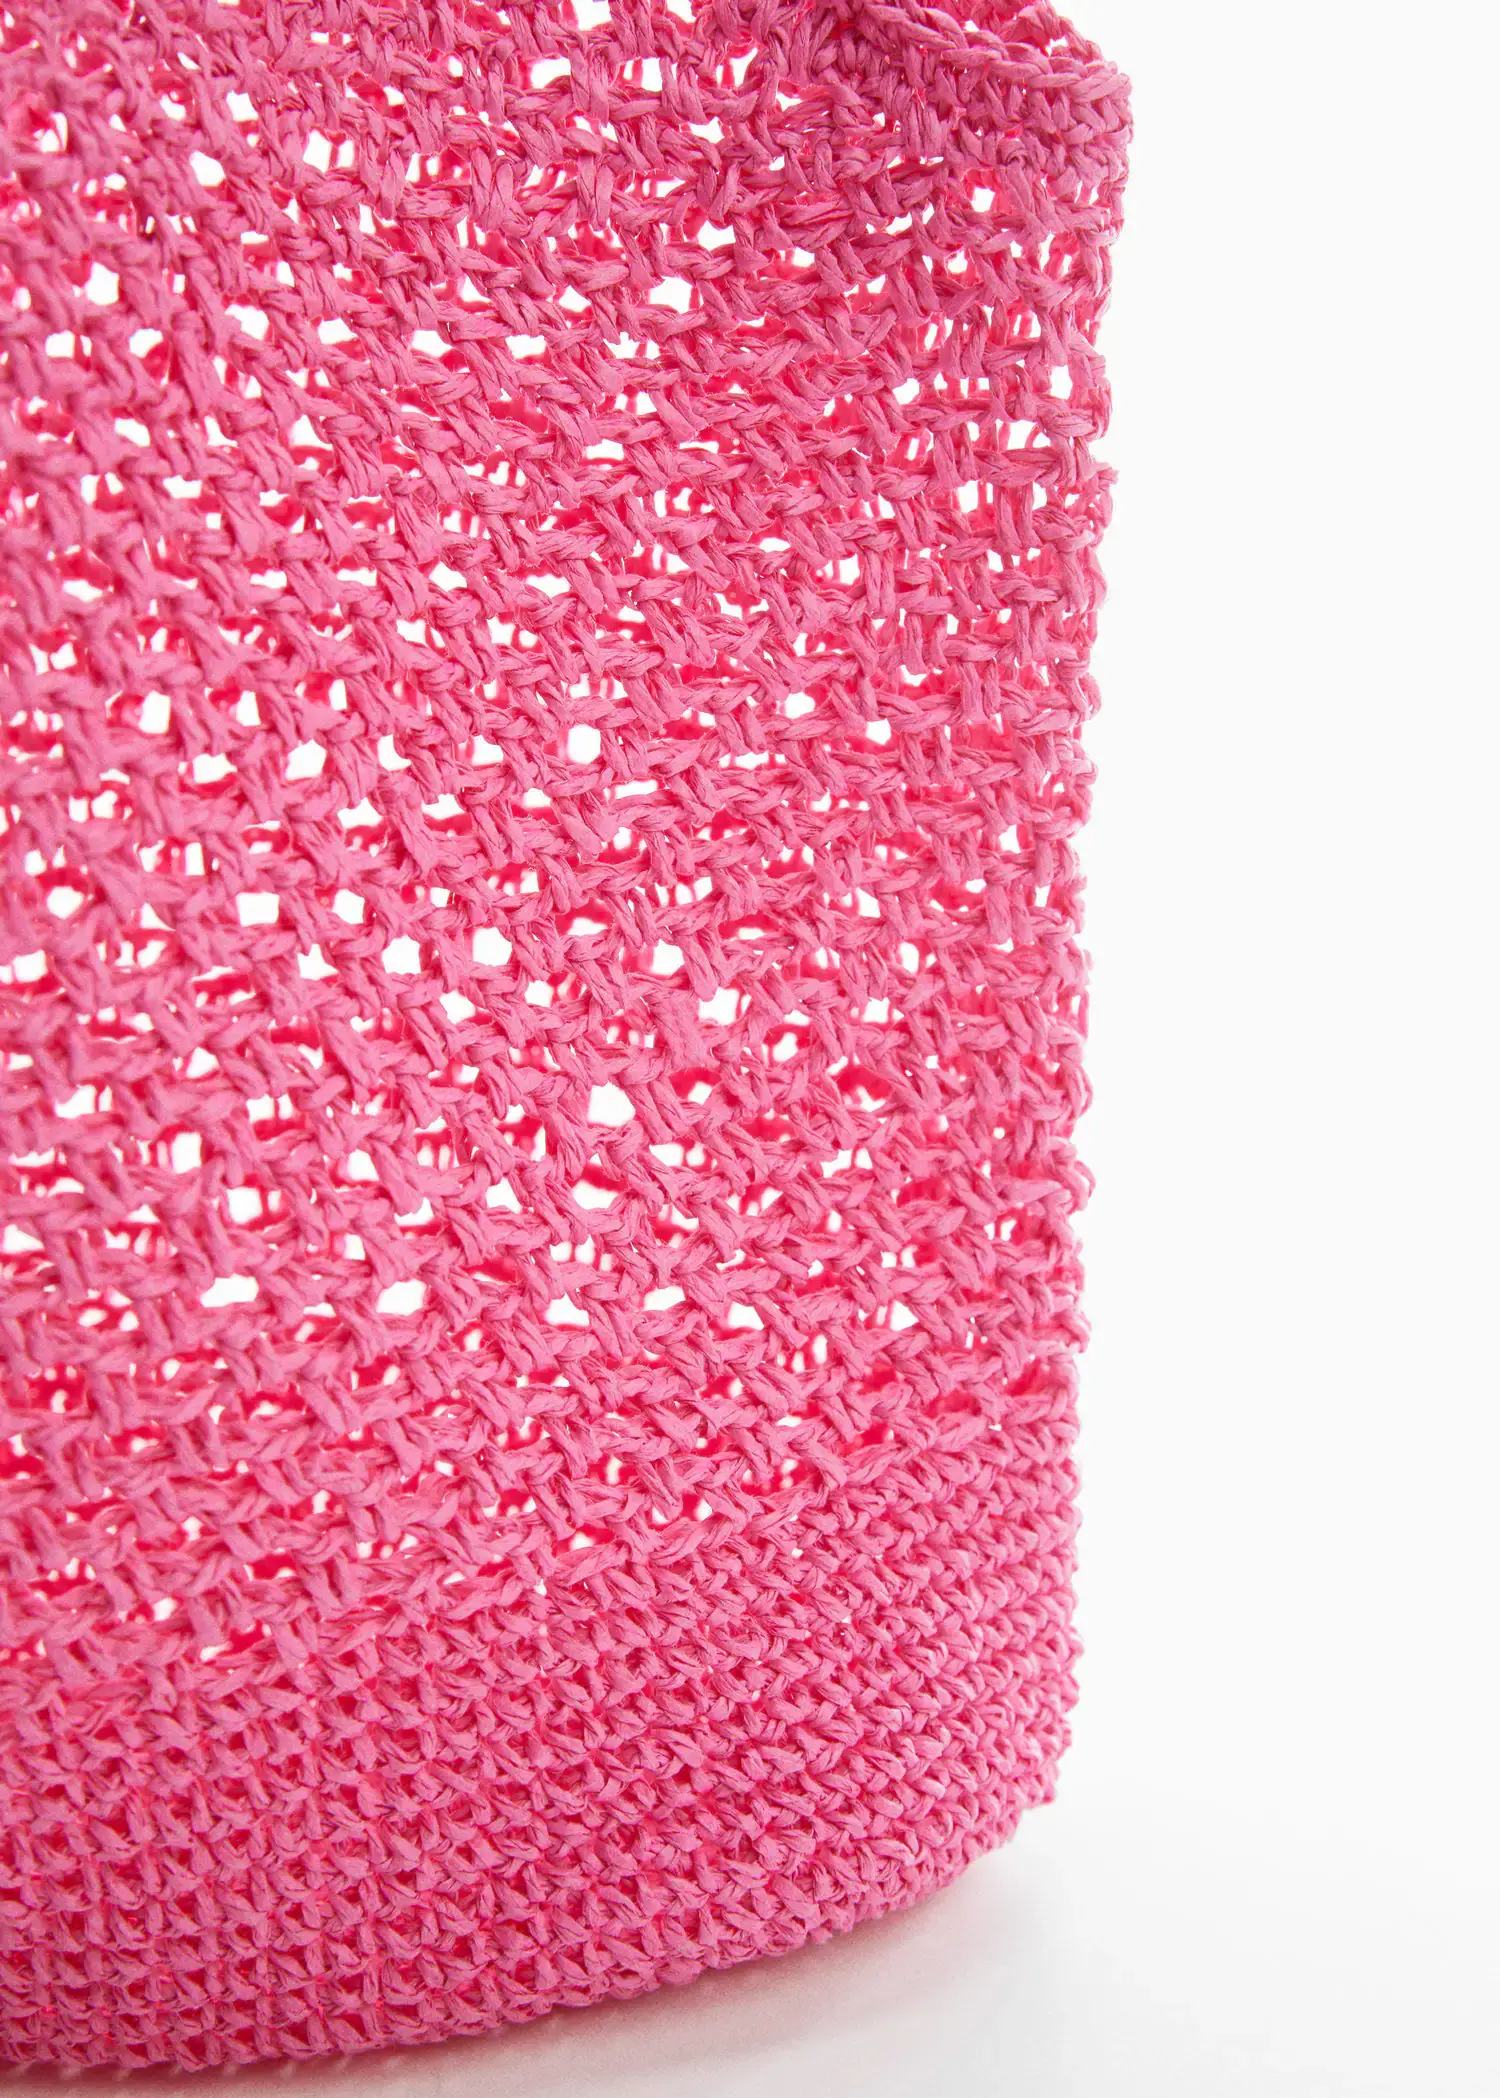 Mango Natural fibre sack bag. a close-up view of a pink crocheted bag. 